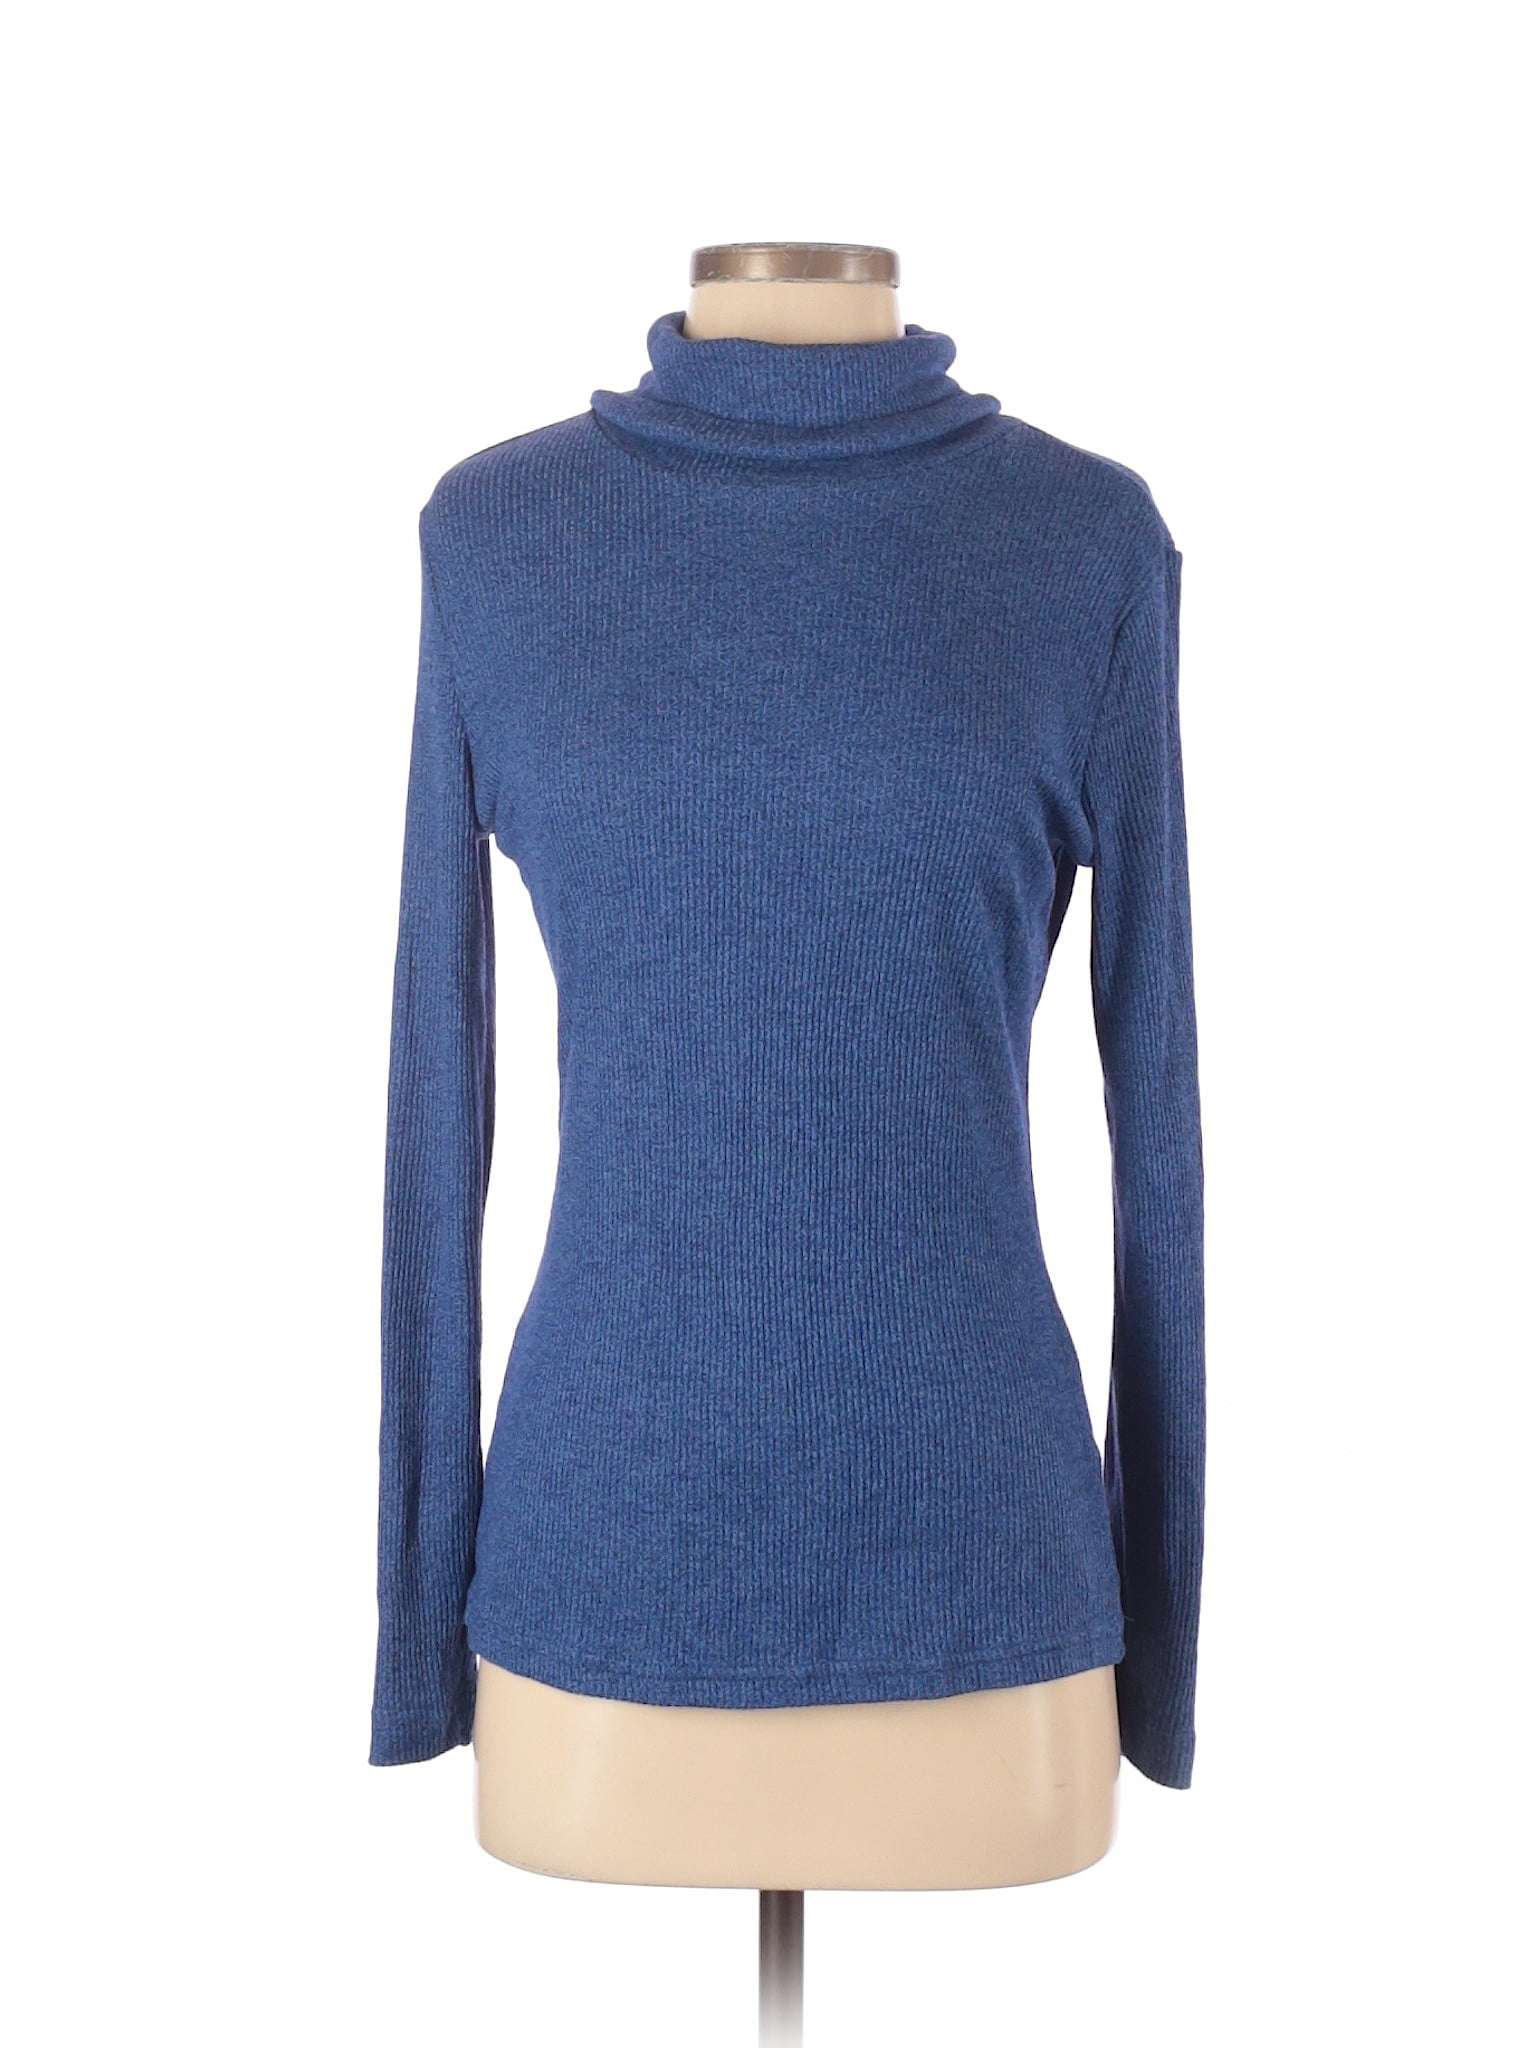 Miladys - Pre-Owned Miladys Women's Size 36 Turtleneck Sweater ...